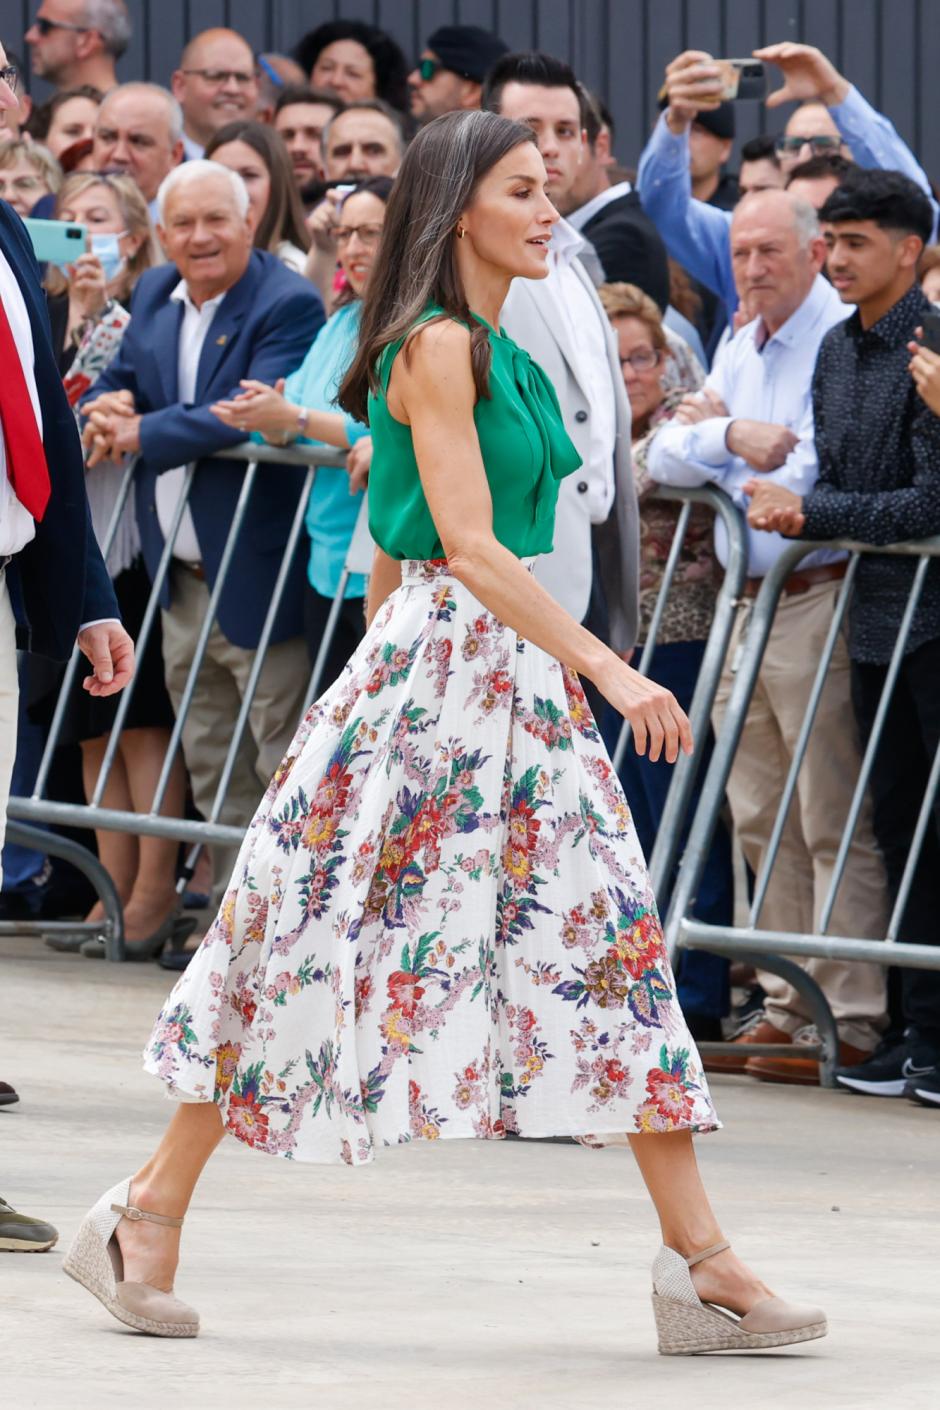 Spanish Queen Letizia Ortiz during a visit to Menorca on occasion of her stay on Balearic islands in Menorca on Thursday, 13 August 2020
en la foto : sandalias de esparto